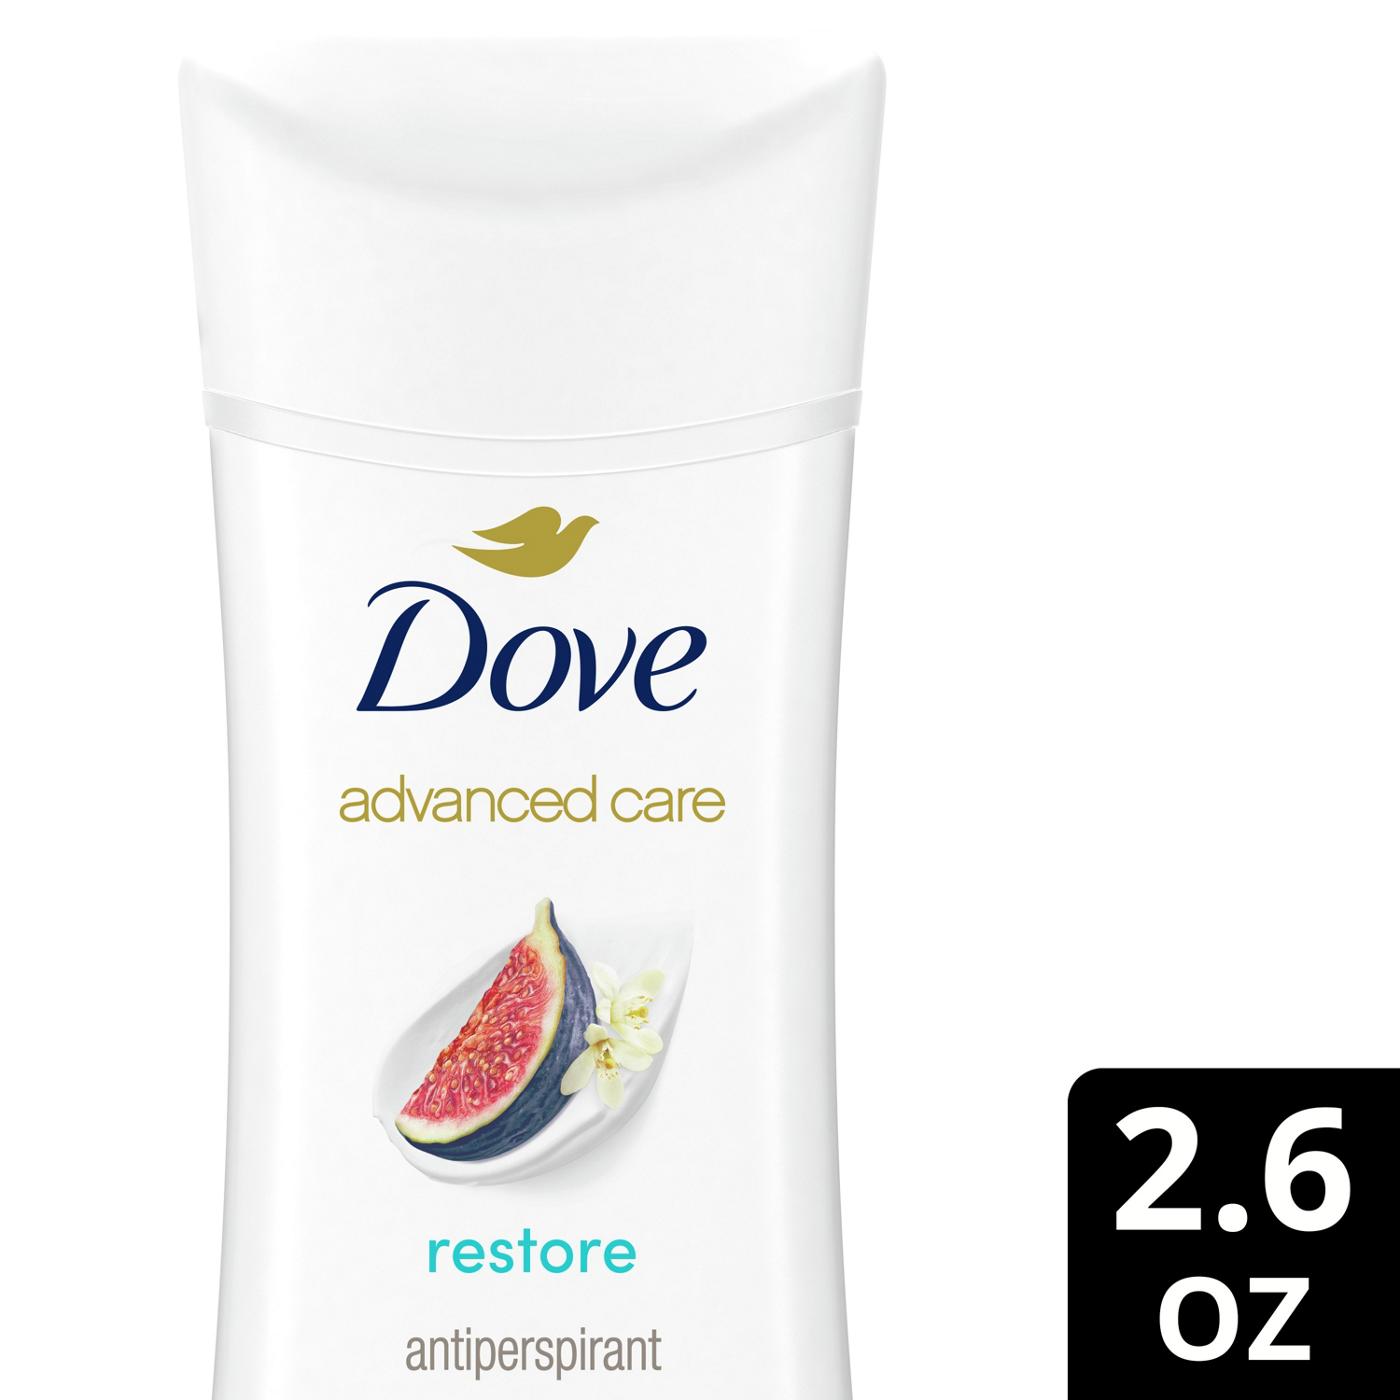 Dove Advanced Care Antiperspirant Deodorant Stick Restore; image 6 of 6